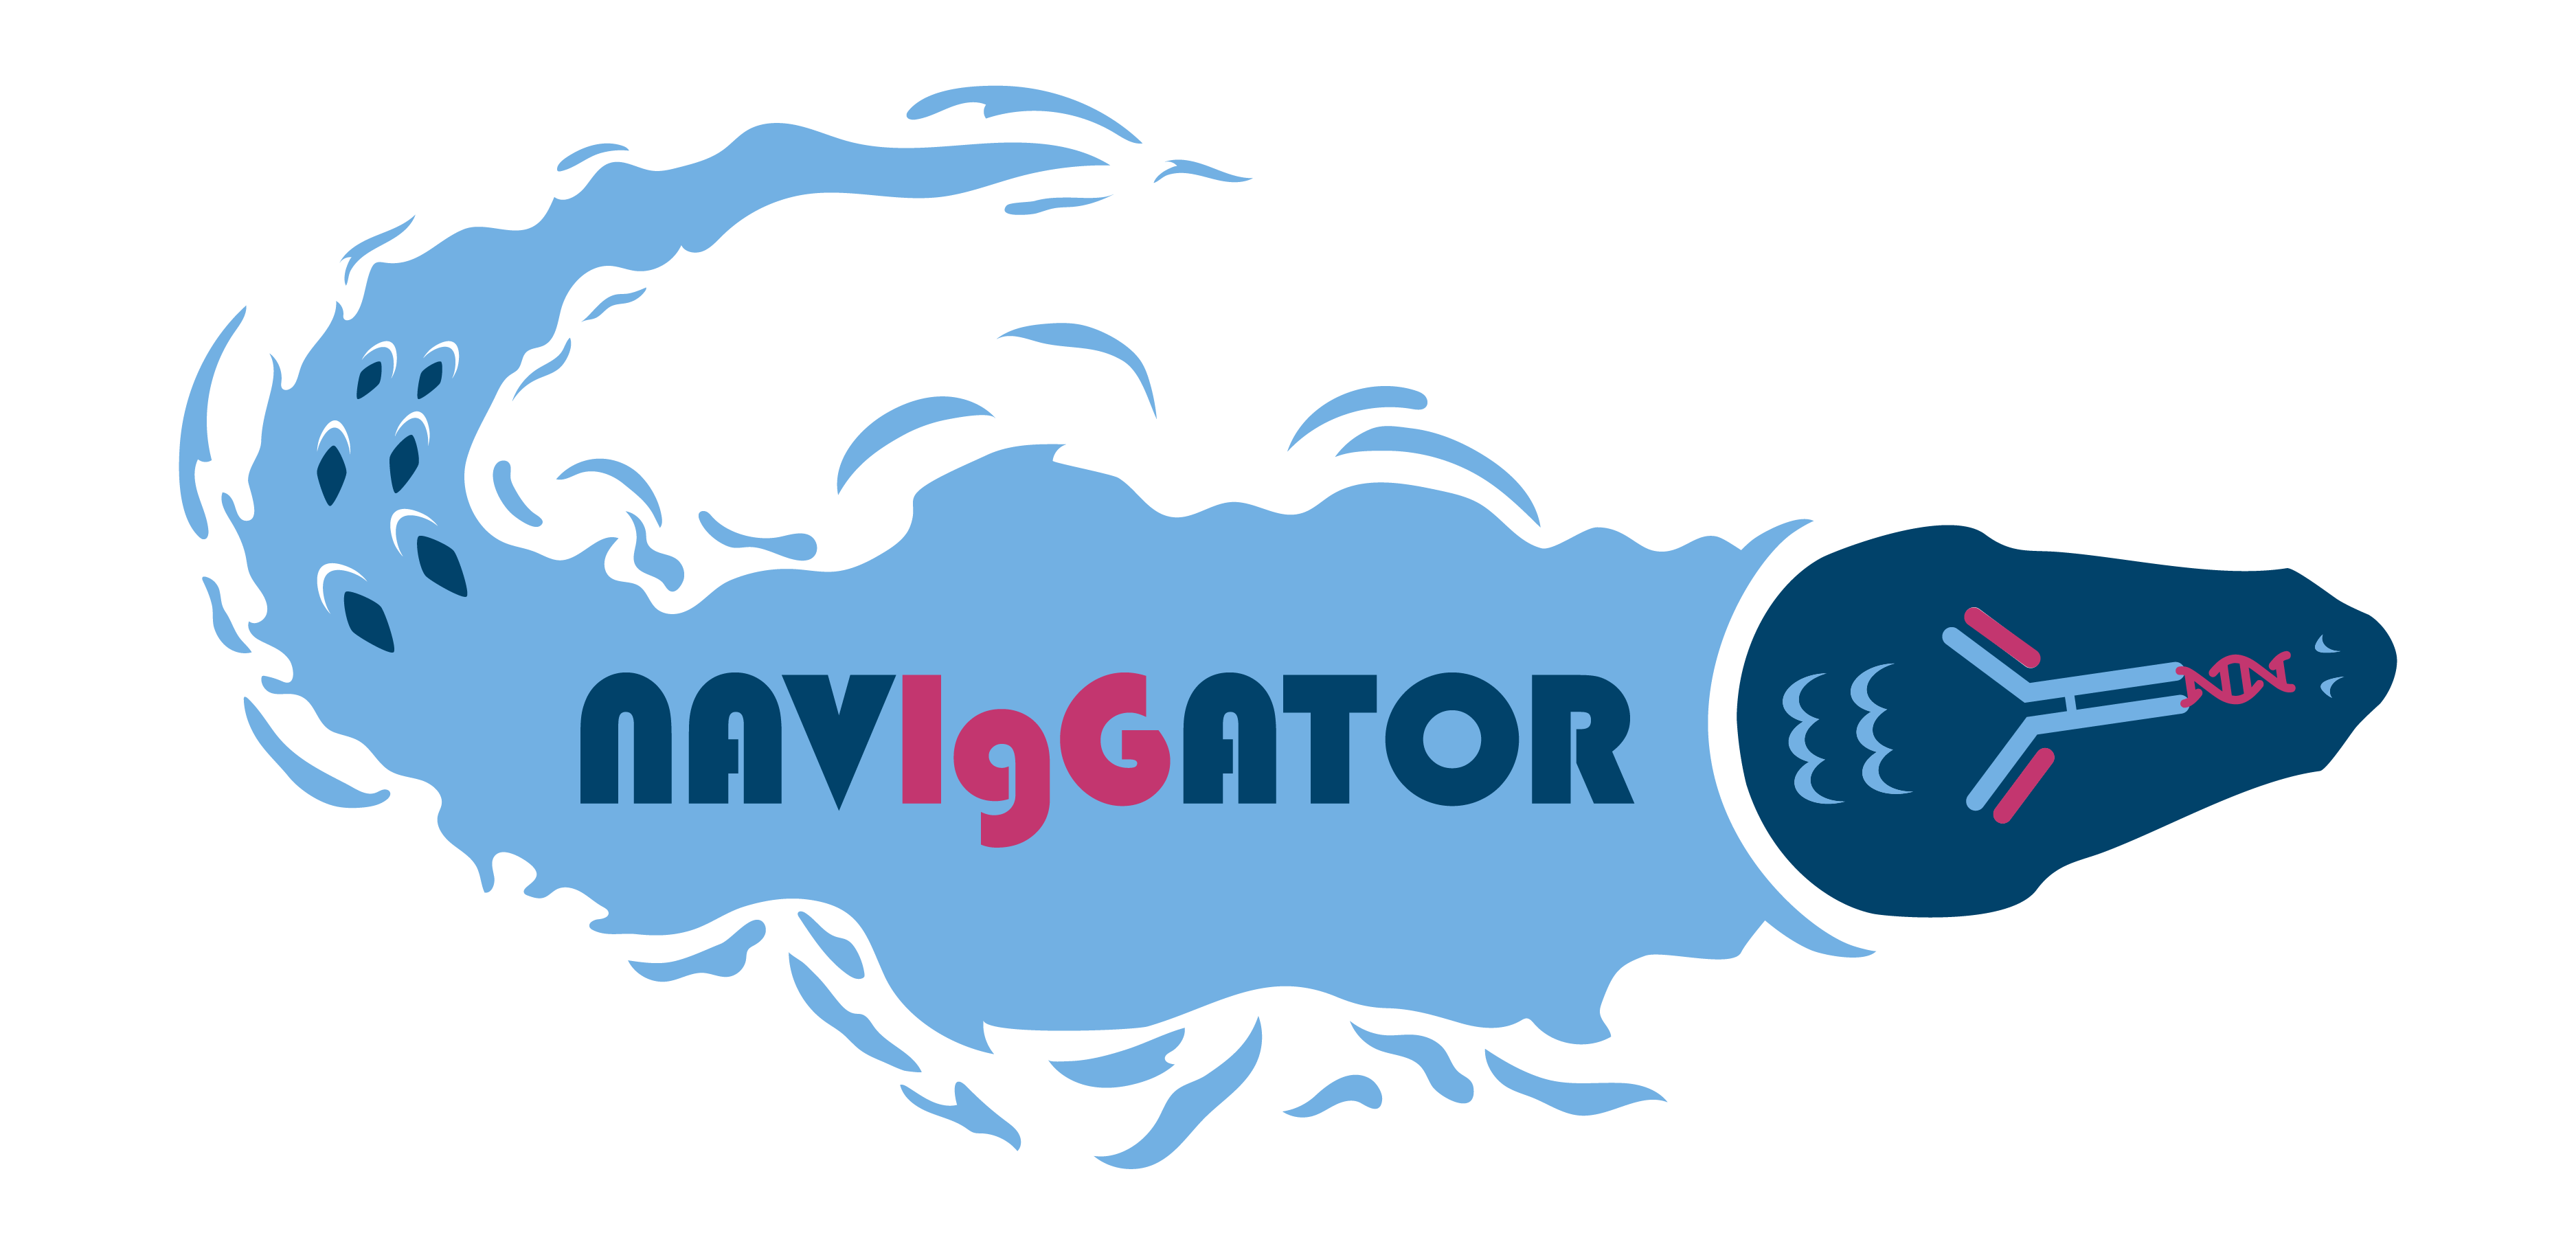 NAVIgGATOR Logo